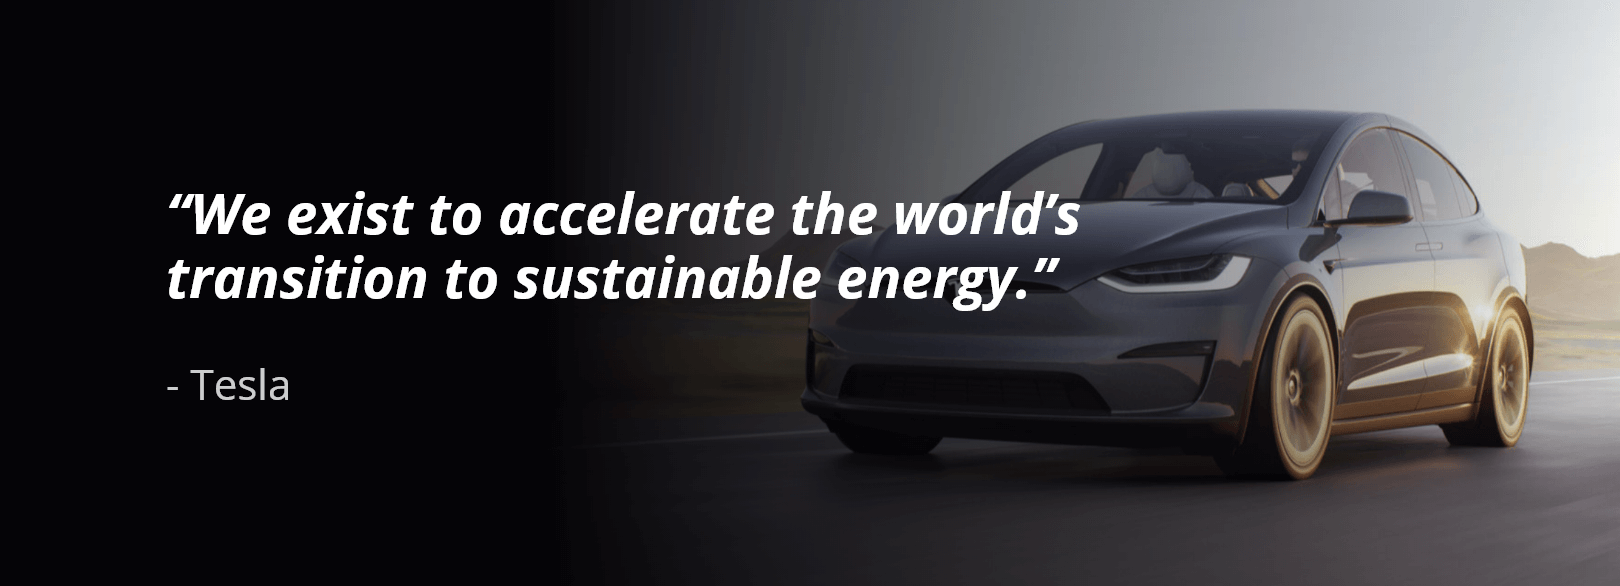 Tesla purpose statement